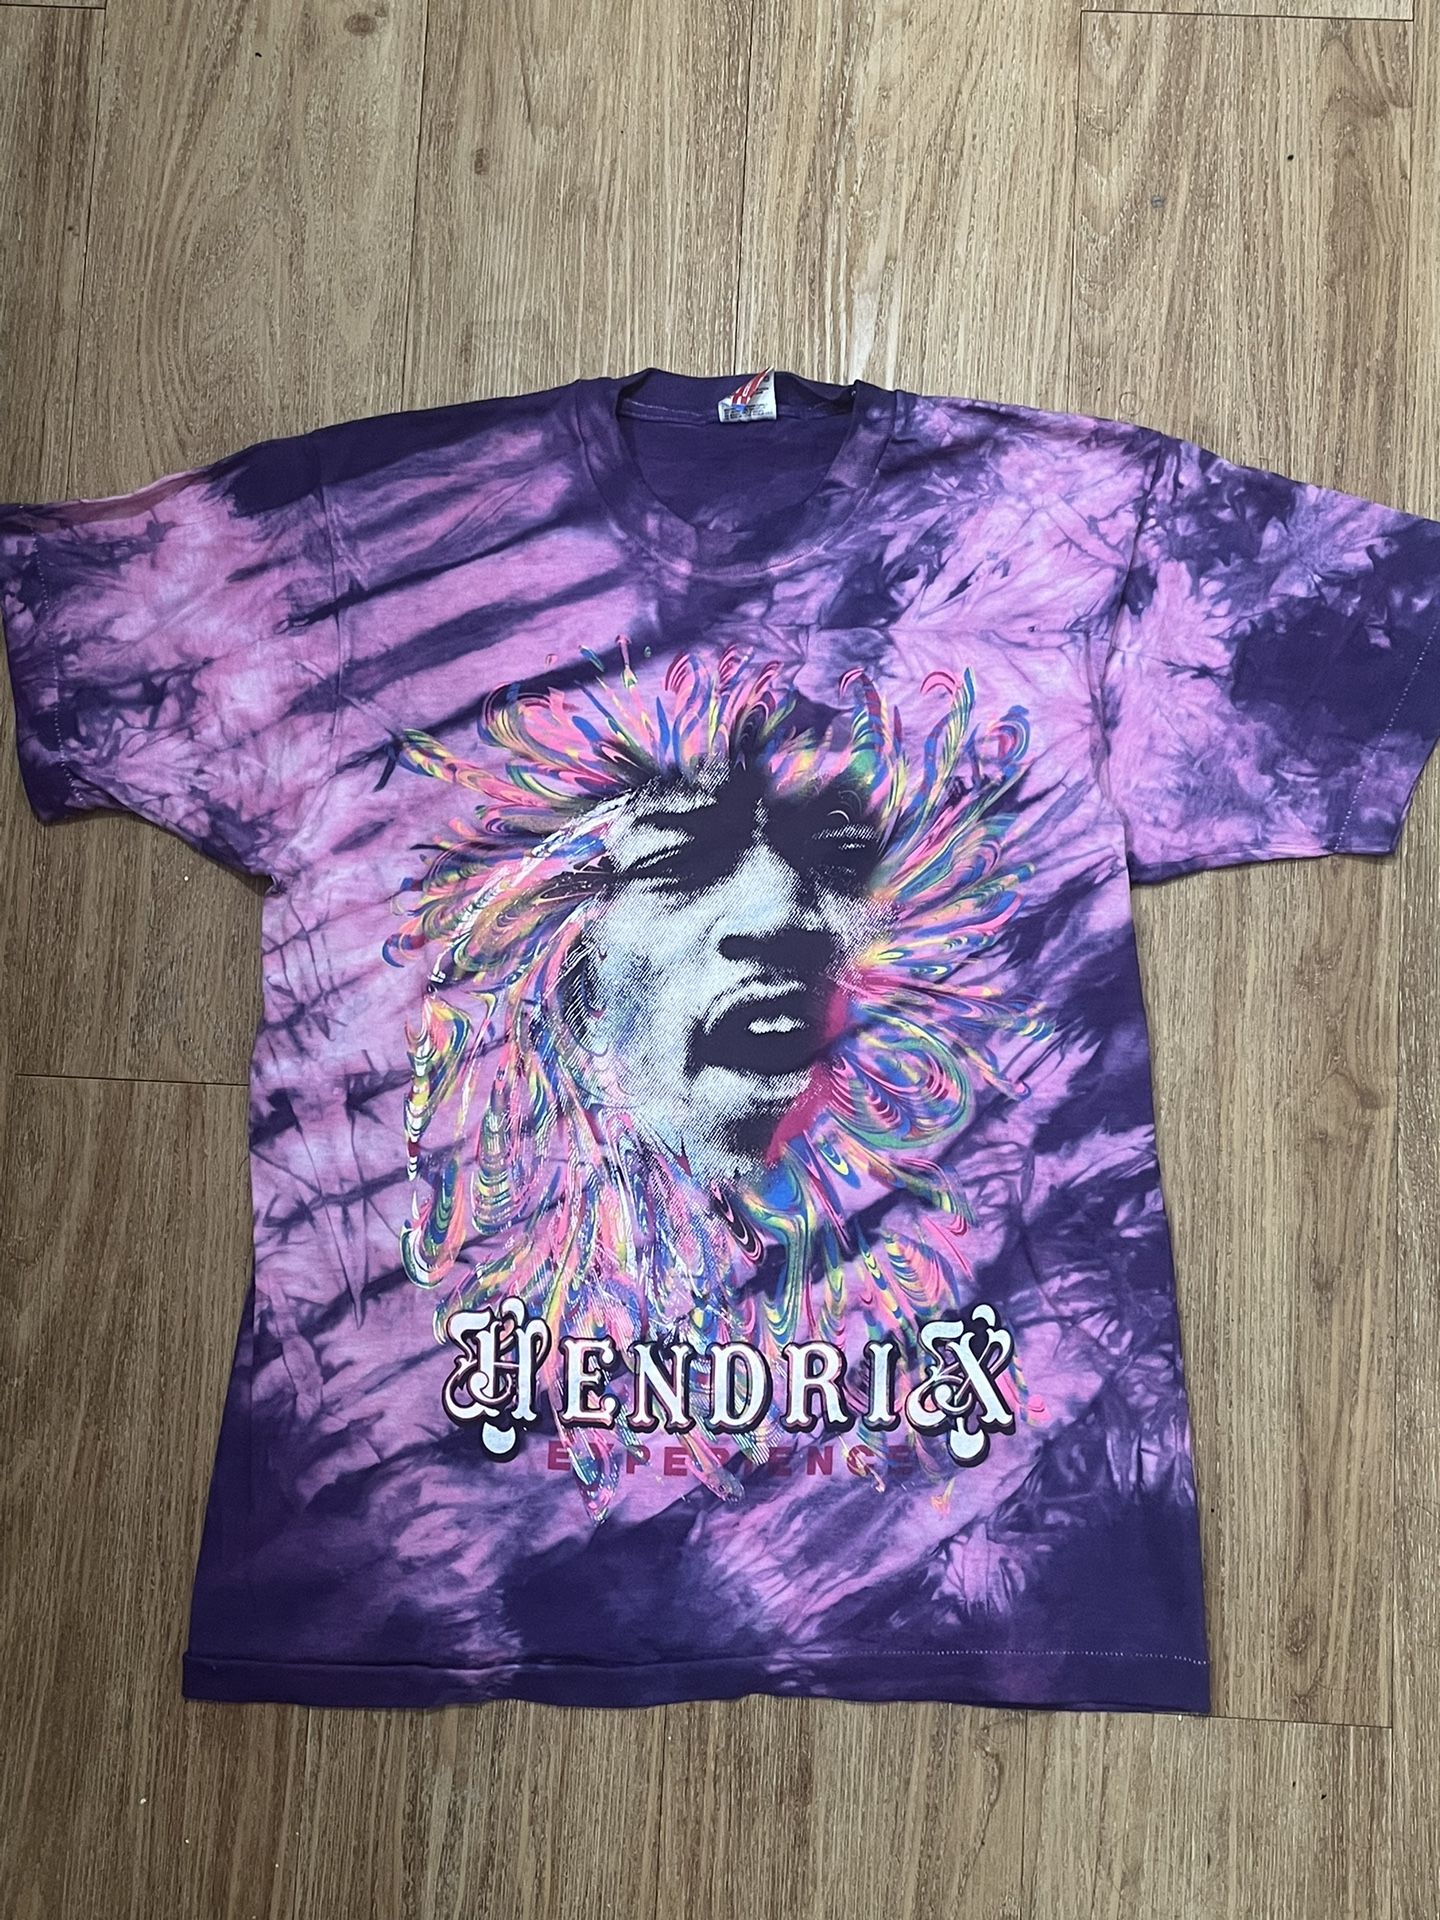 Vintage Jimmy Hendrix Tie Dye Shirt